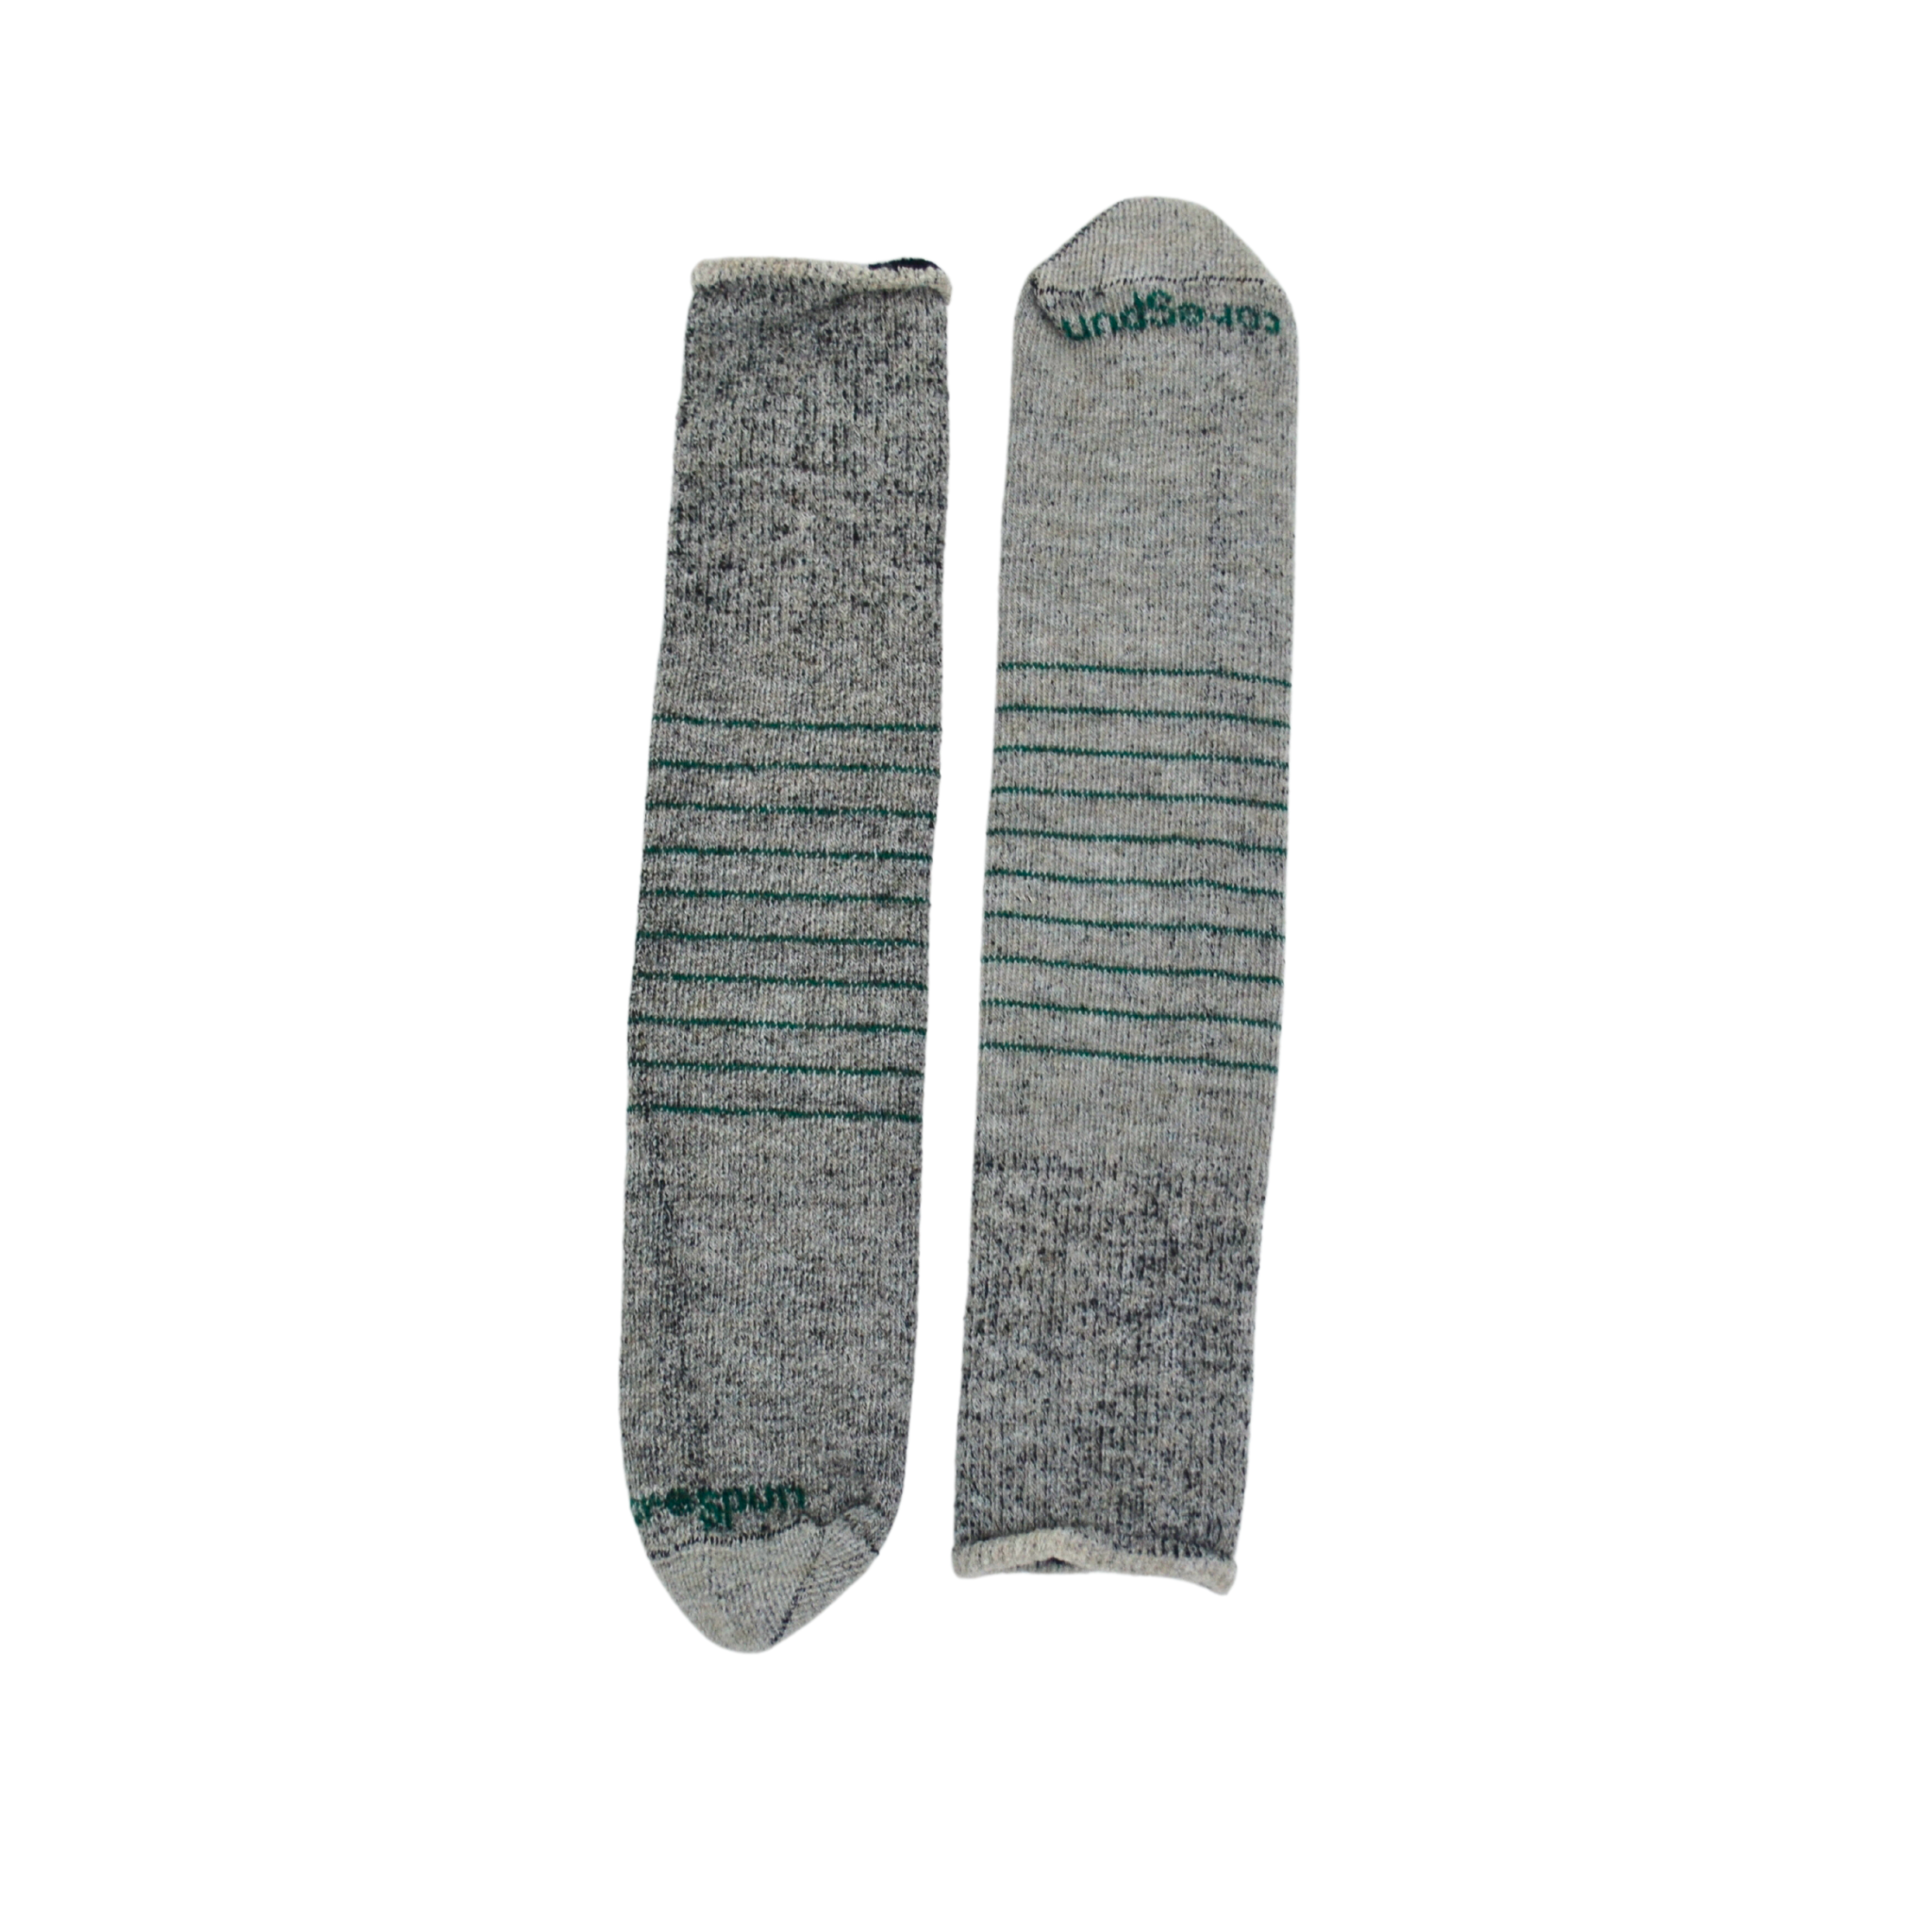 Knitrite - Patterned AFO Socks for Kids - Core Spun - 3 pair pack